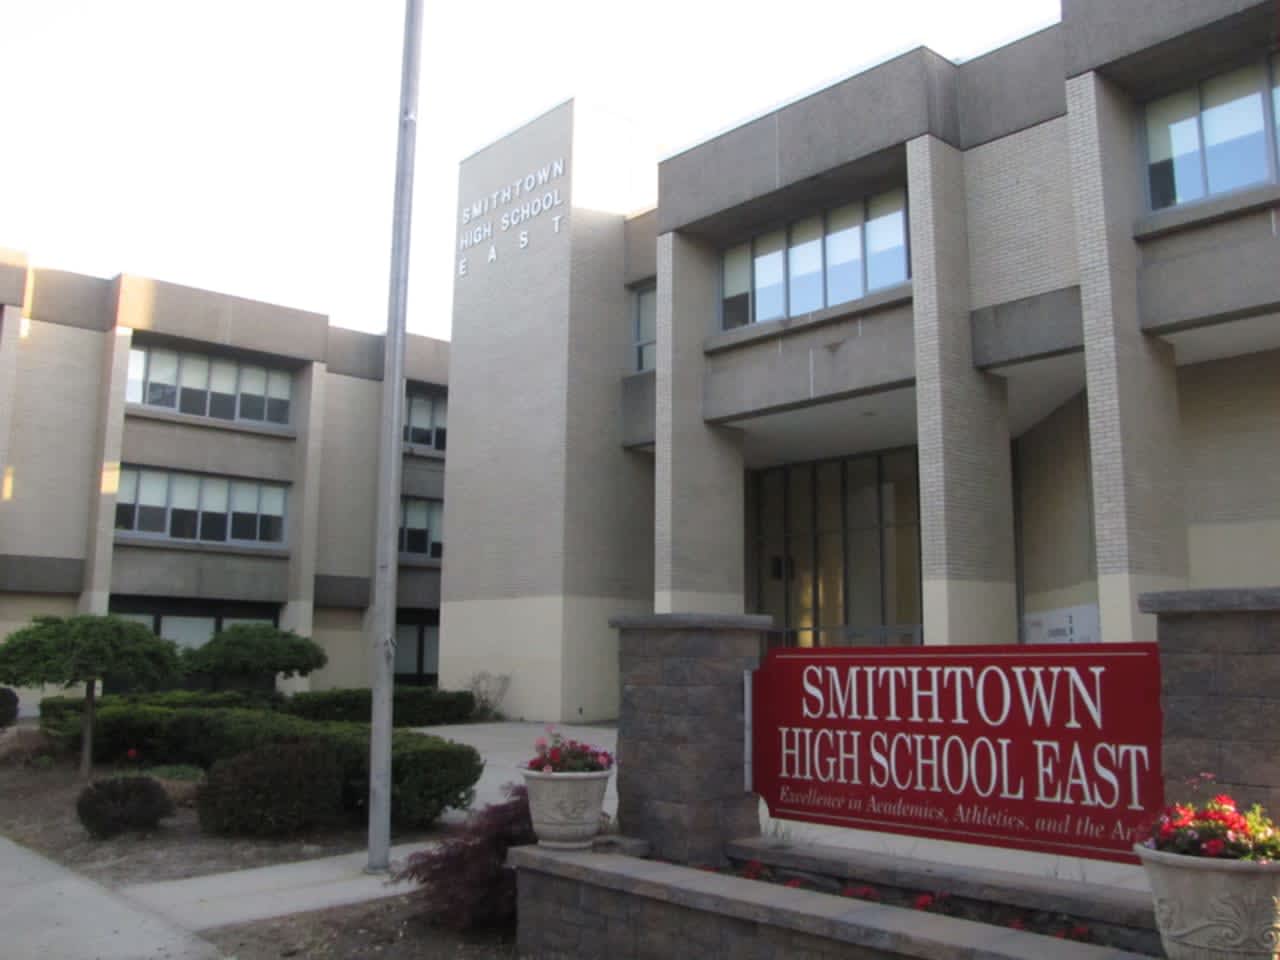 Smithtown High School East.